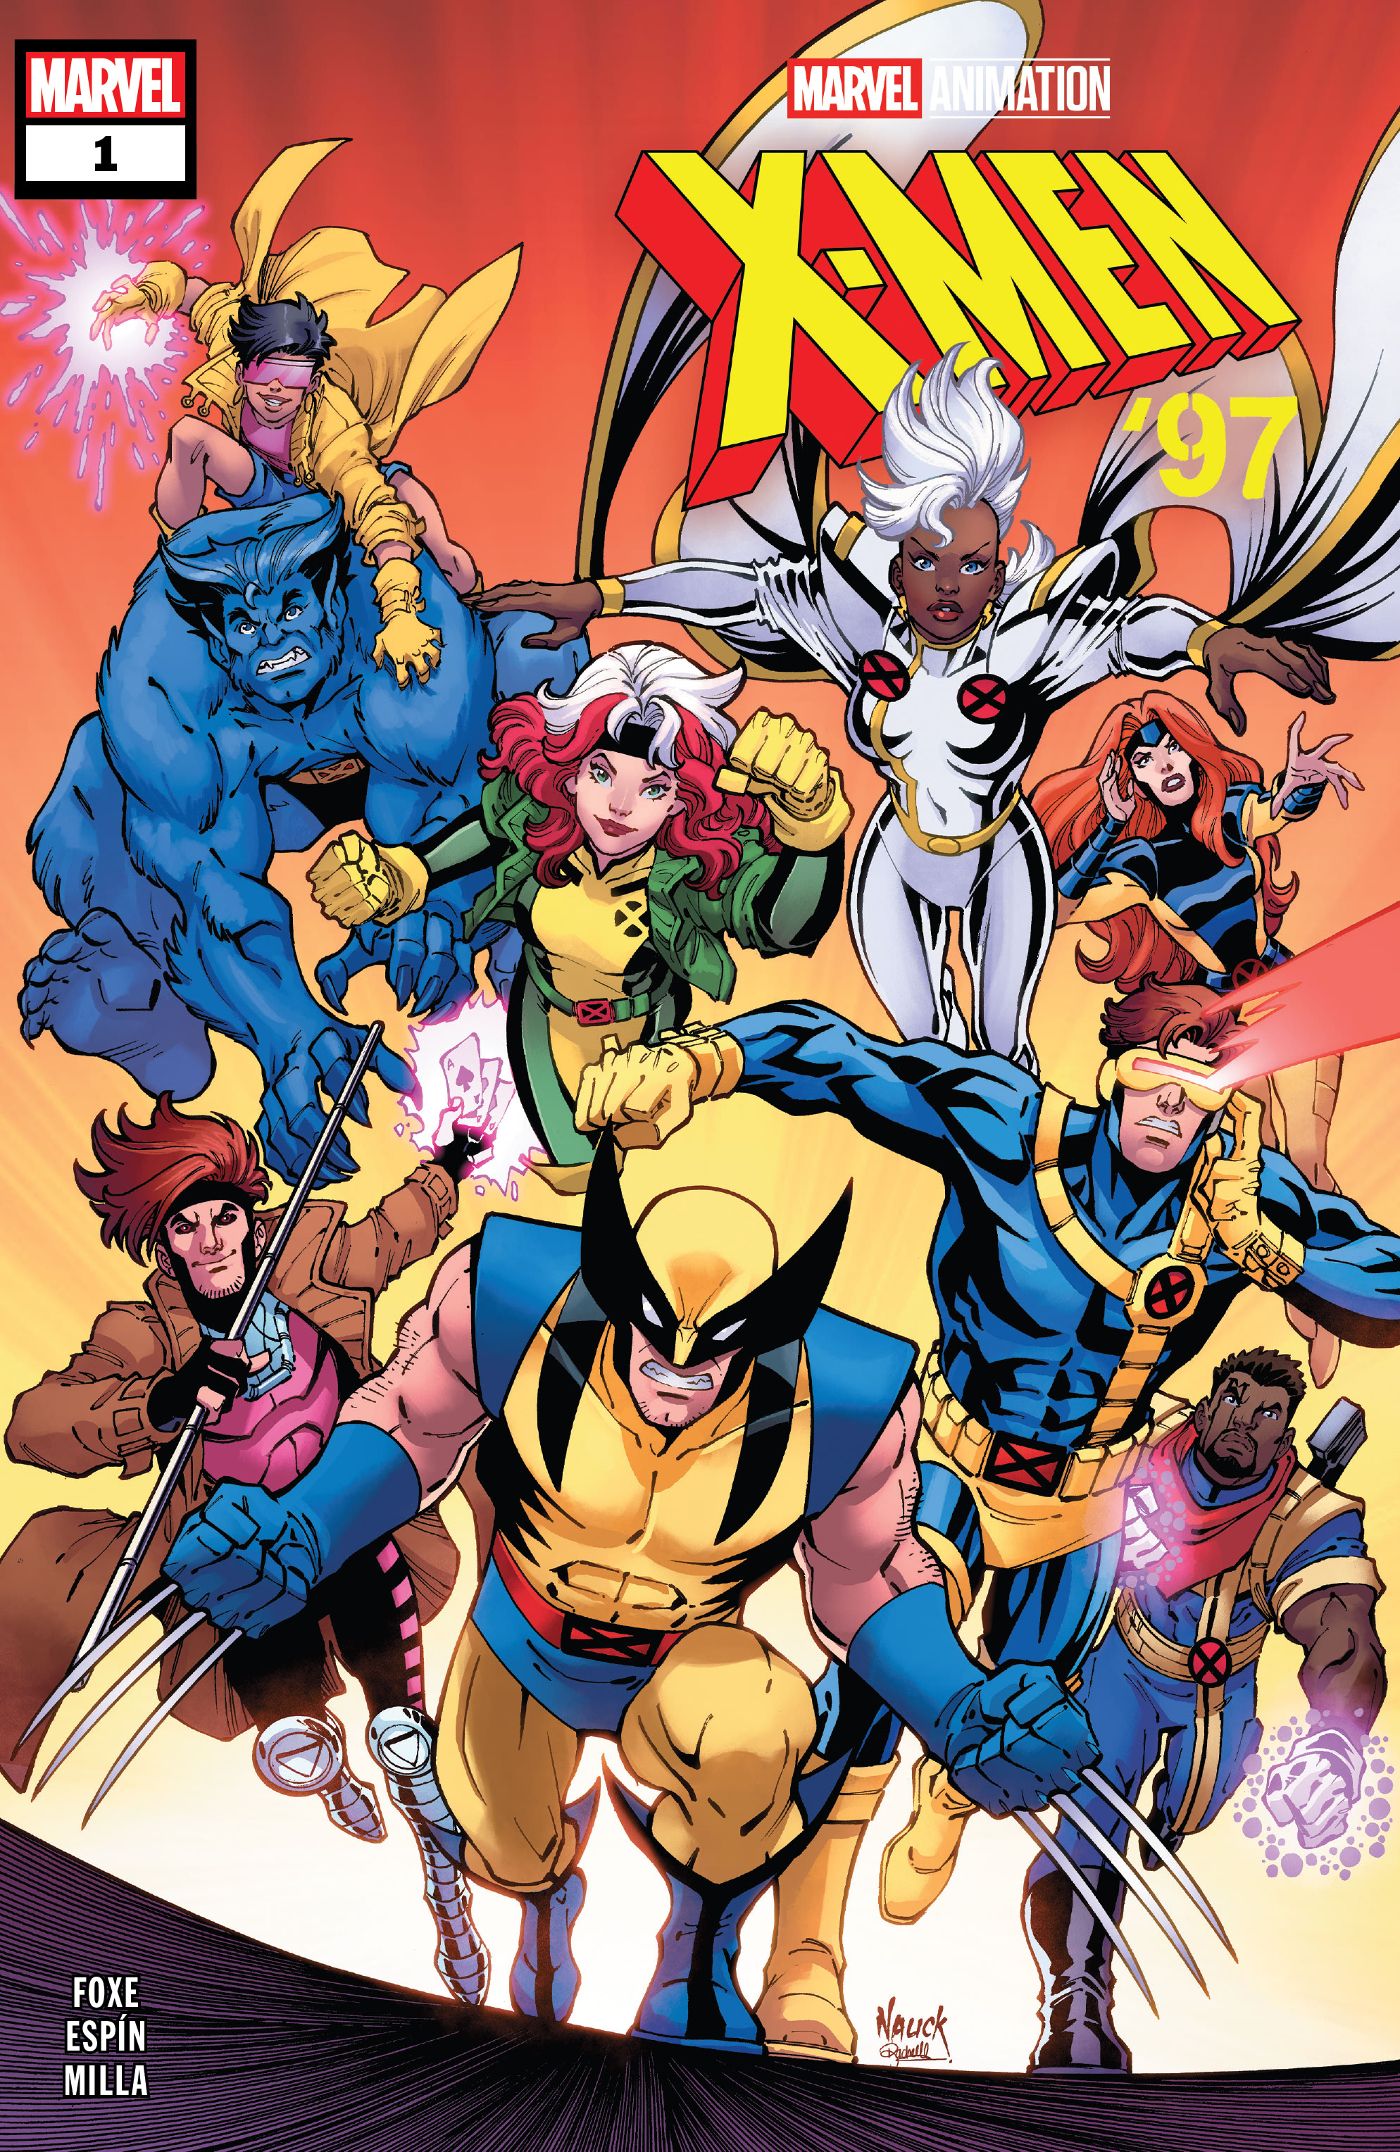 The X-Men team of Wolverine, Cyclops, Gambit, Bishop, Rogue, Storm, Beast, and Jean Grey running. 